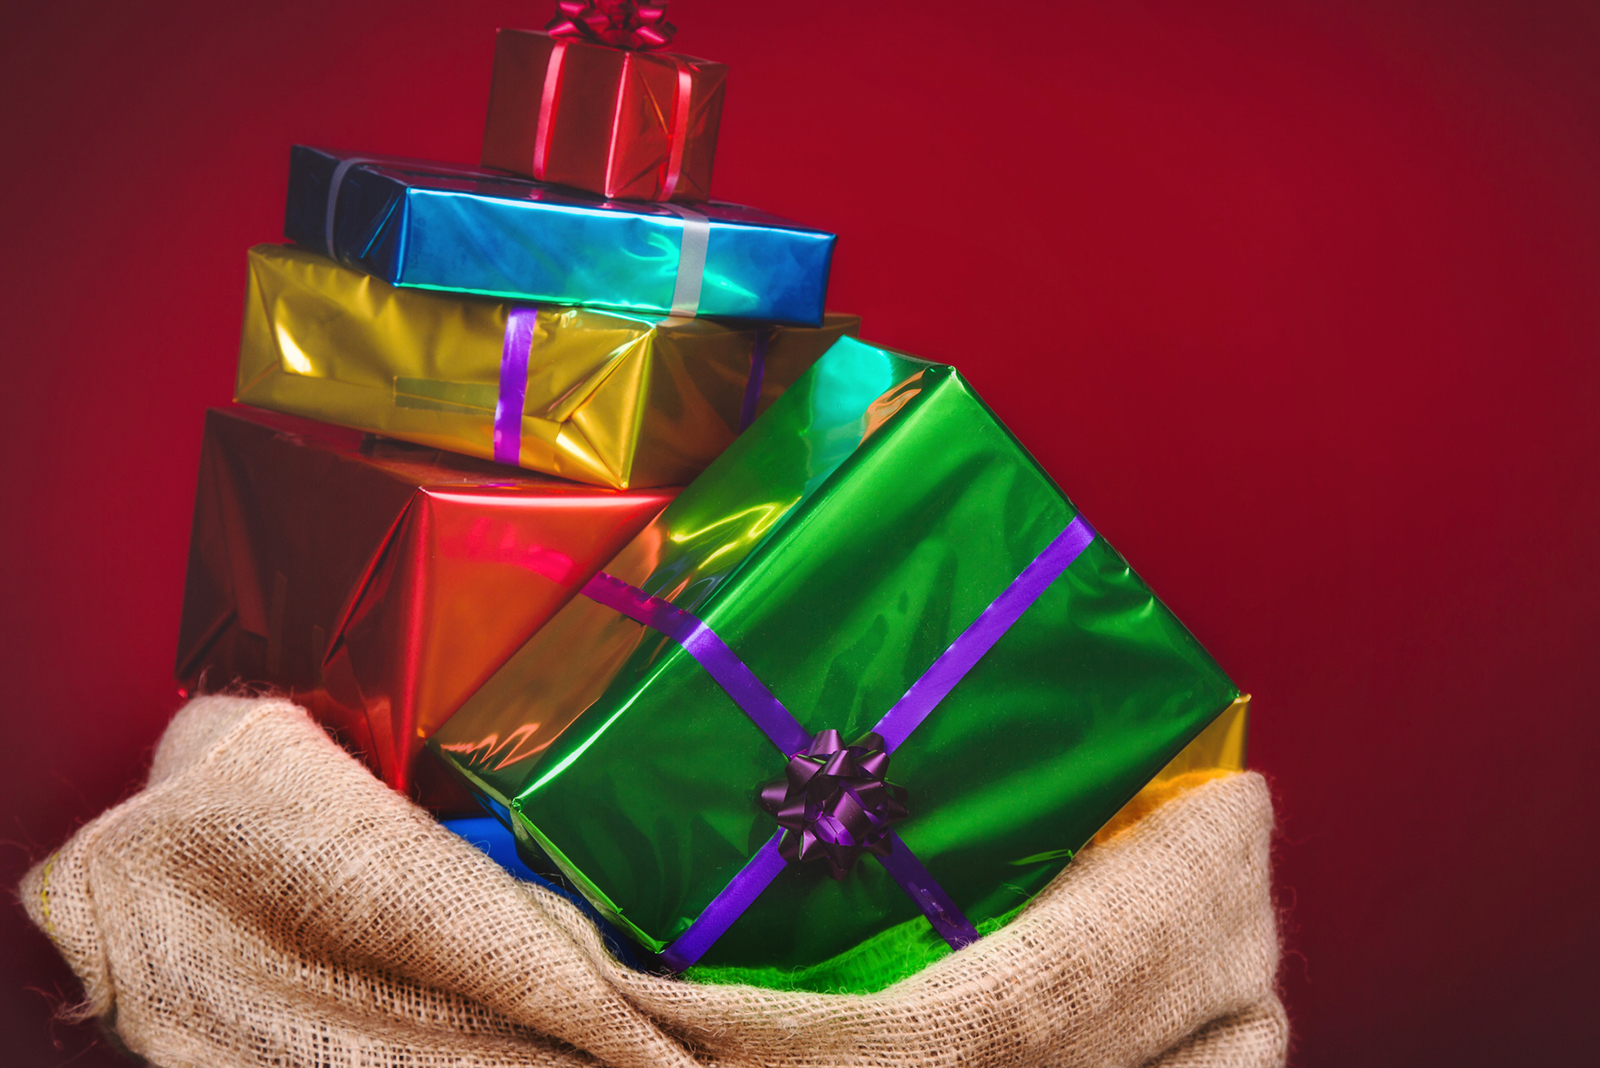 Van toepassing Los aan de andere kant, Hoeveel cadeaus geven voor Sinterklaas: wat geef ik uit? - Love2BeMama